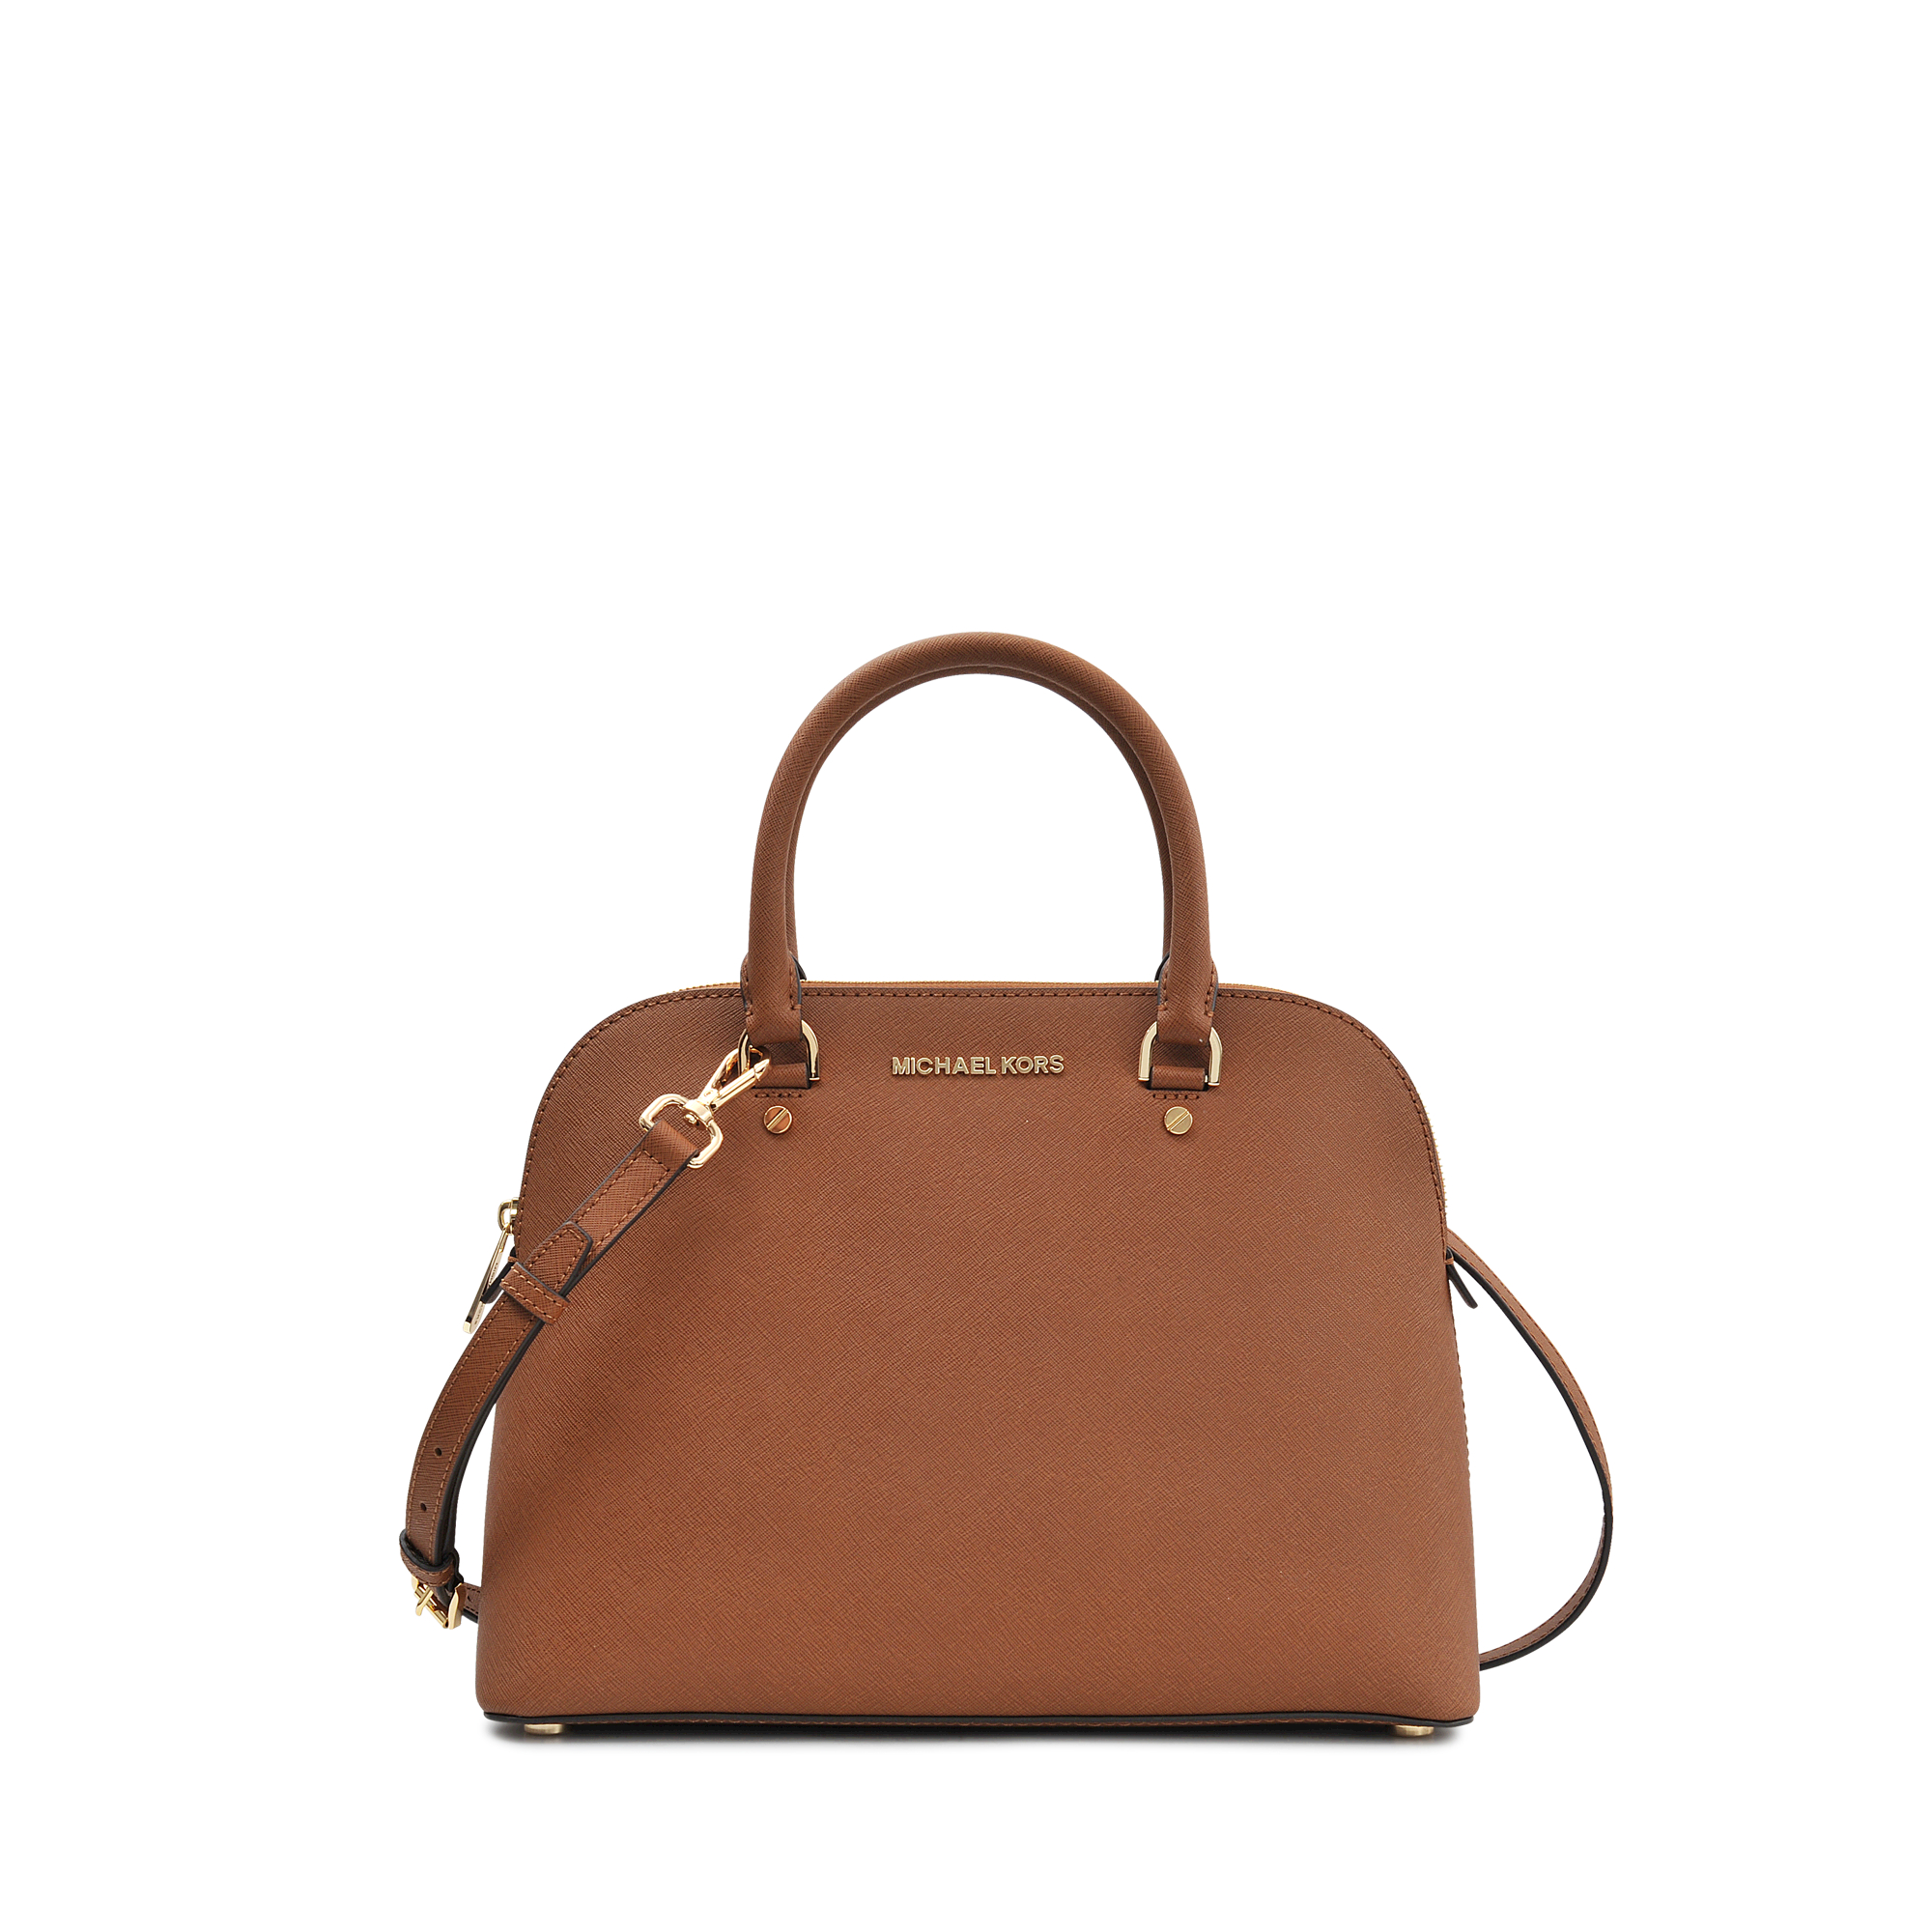 Cheap Michael Kors Handbags Outlet Online Clearance Sale | Michael kors  shoulder bag, Handbags michael kors, Shoulder bag women